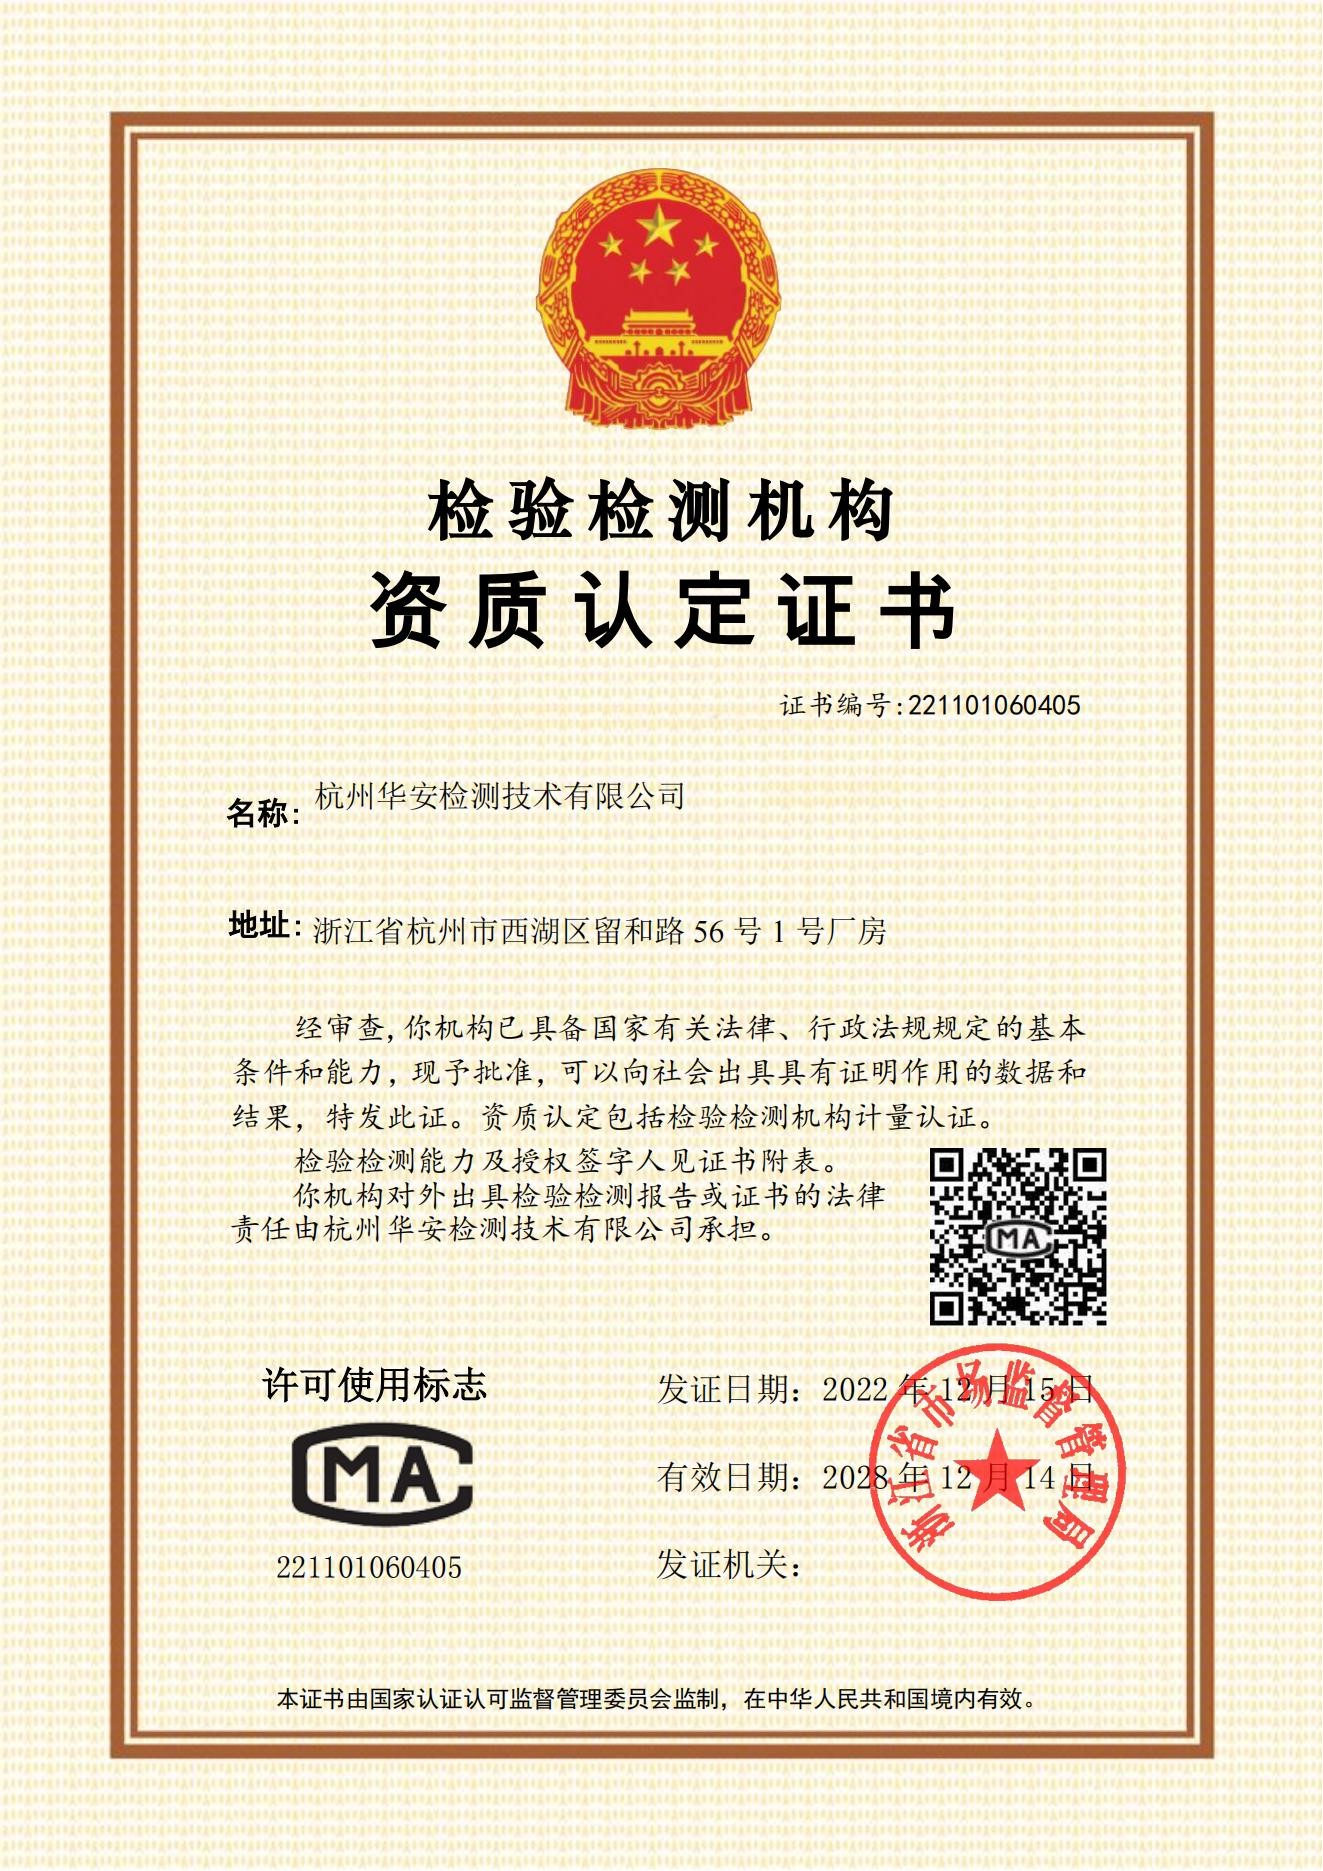 China measurement certificate (CMA)